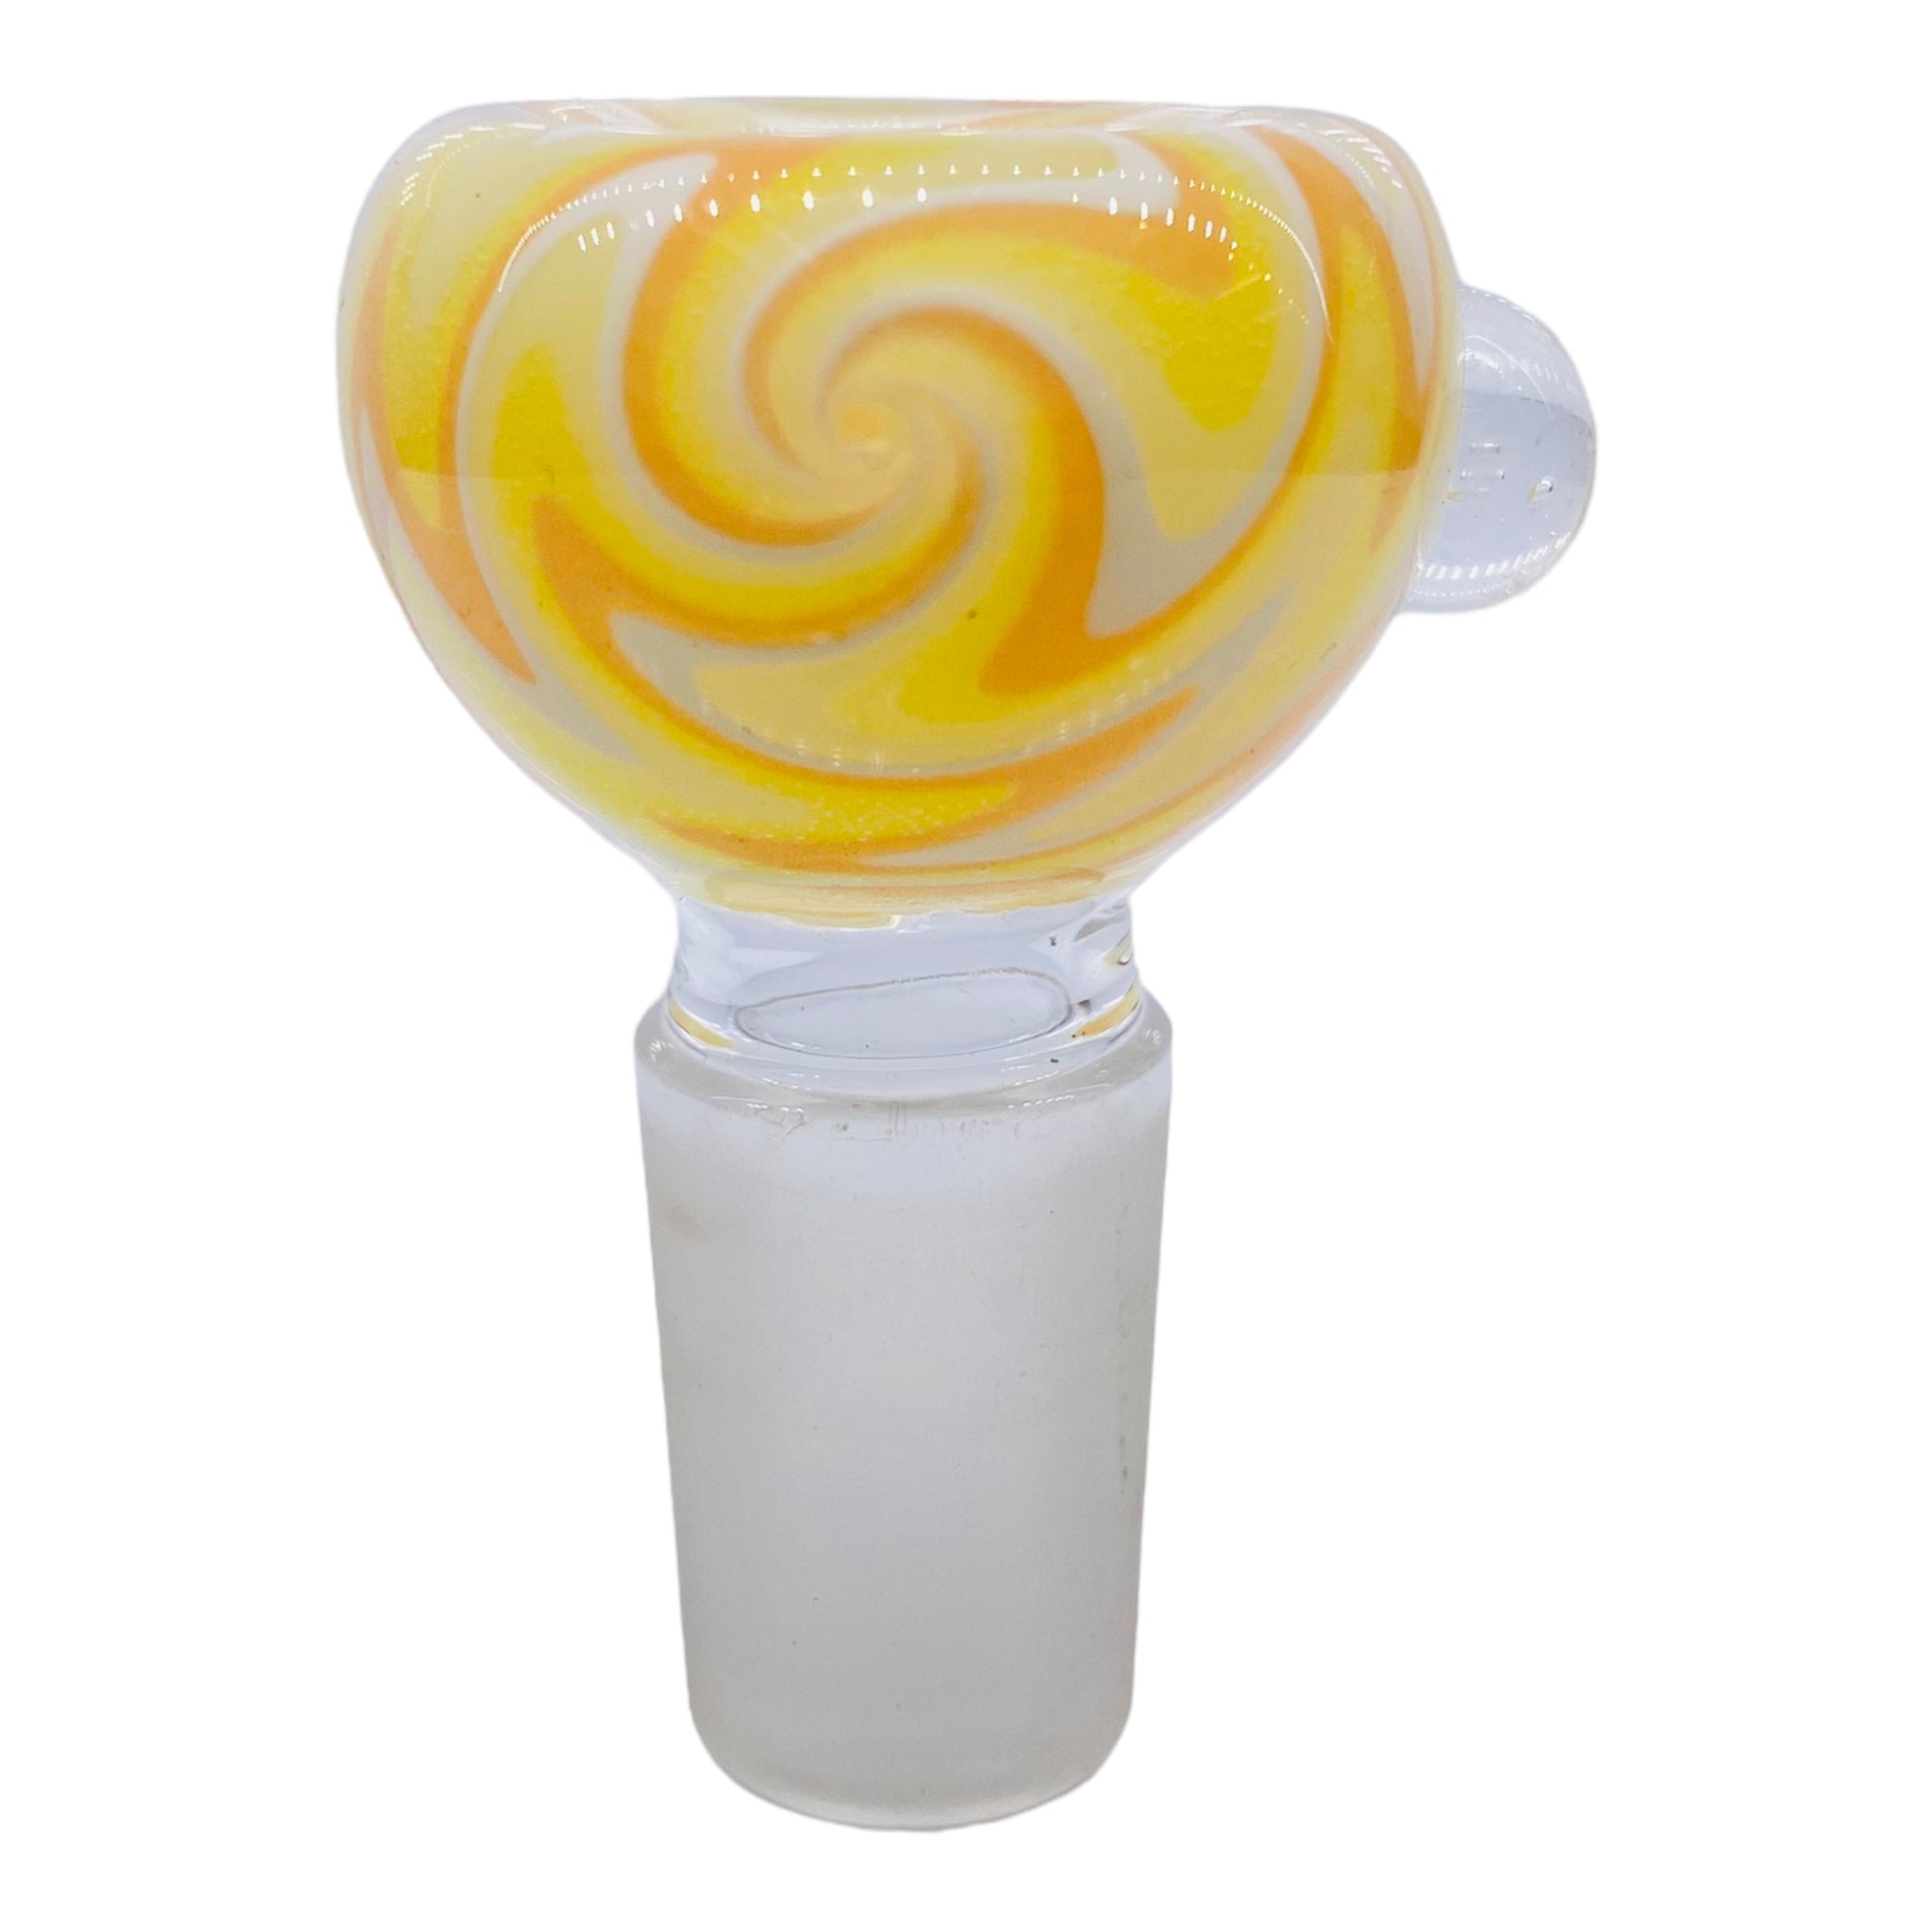 18mm Flower Bowl - Yellow, Orange And White Wig Wag Twirl Basic Bubble Bong Bowl Piece